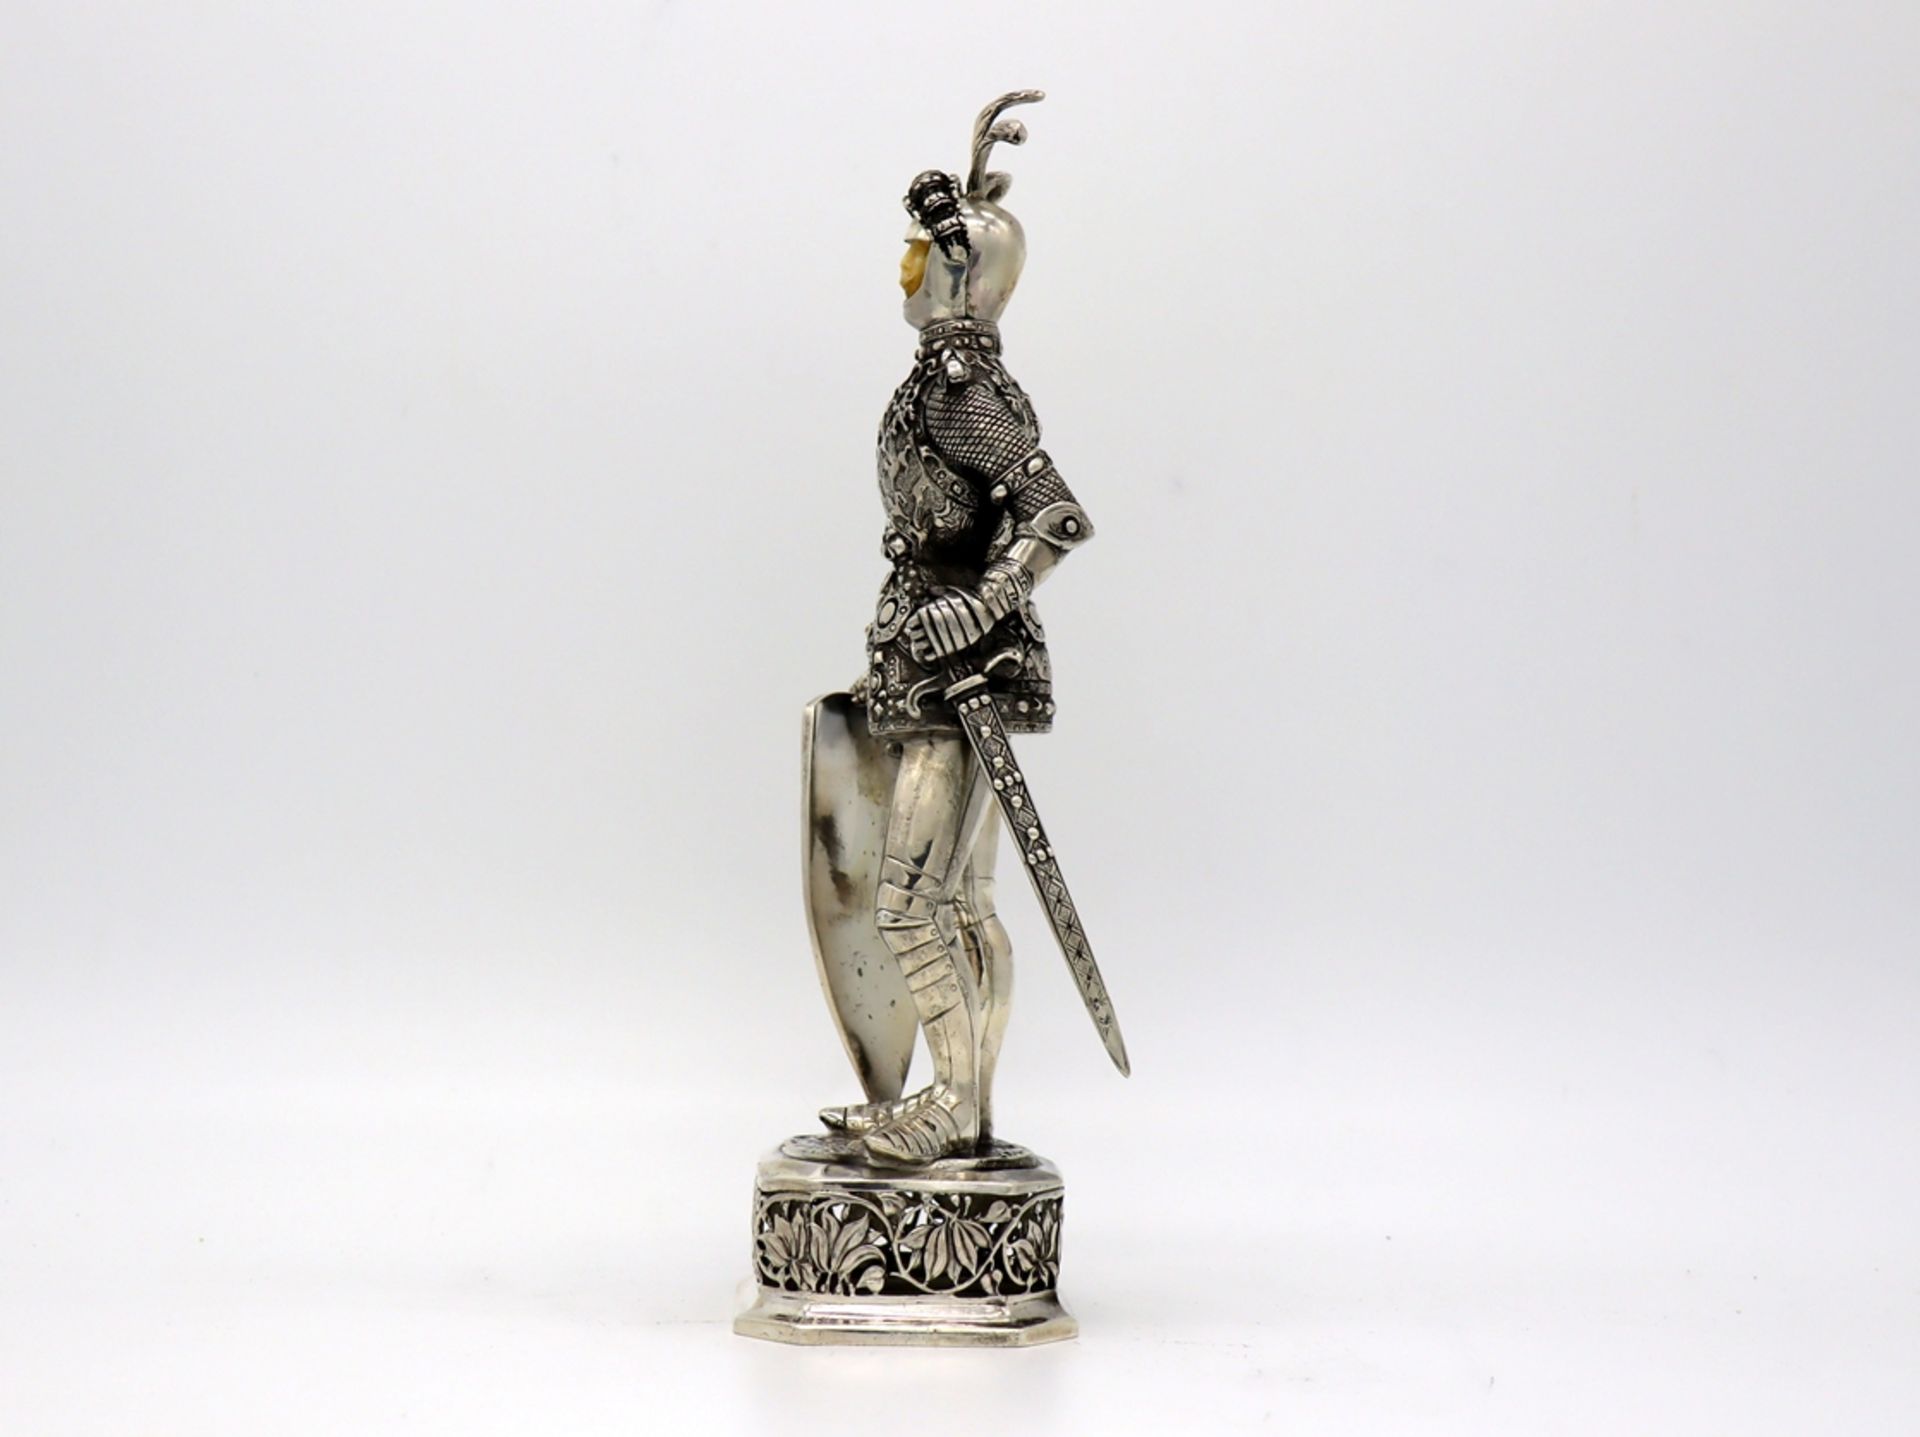 Knight figure in 800 silver, Jean-Louis Schlingloff (1907-1930) full-sculpture representation. - Image 2 of 9